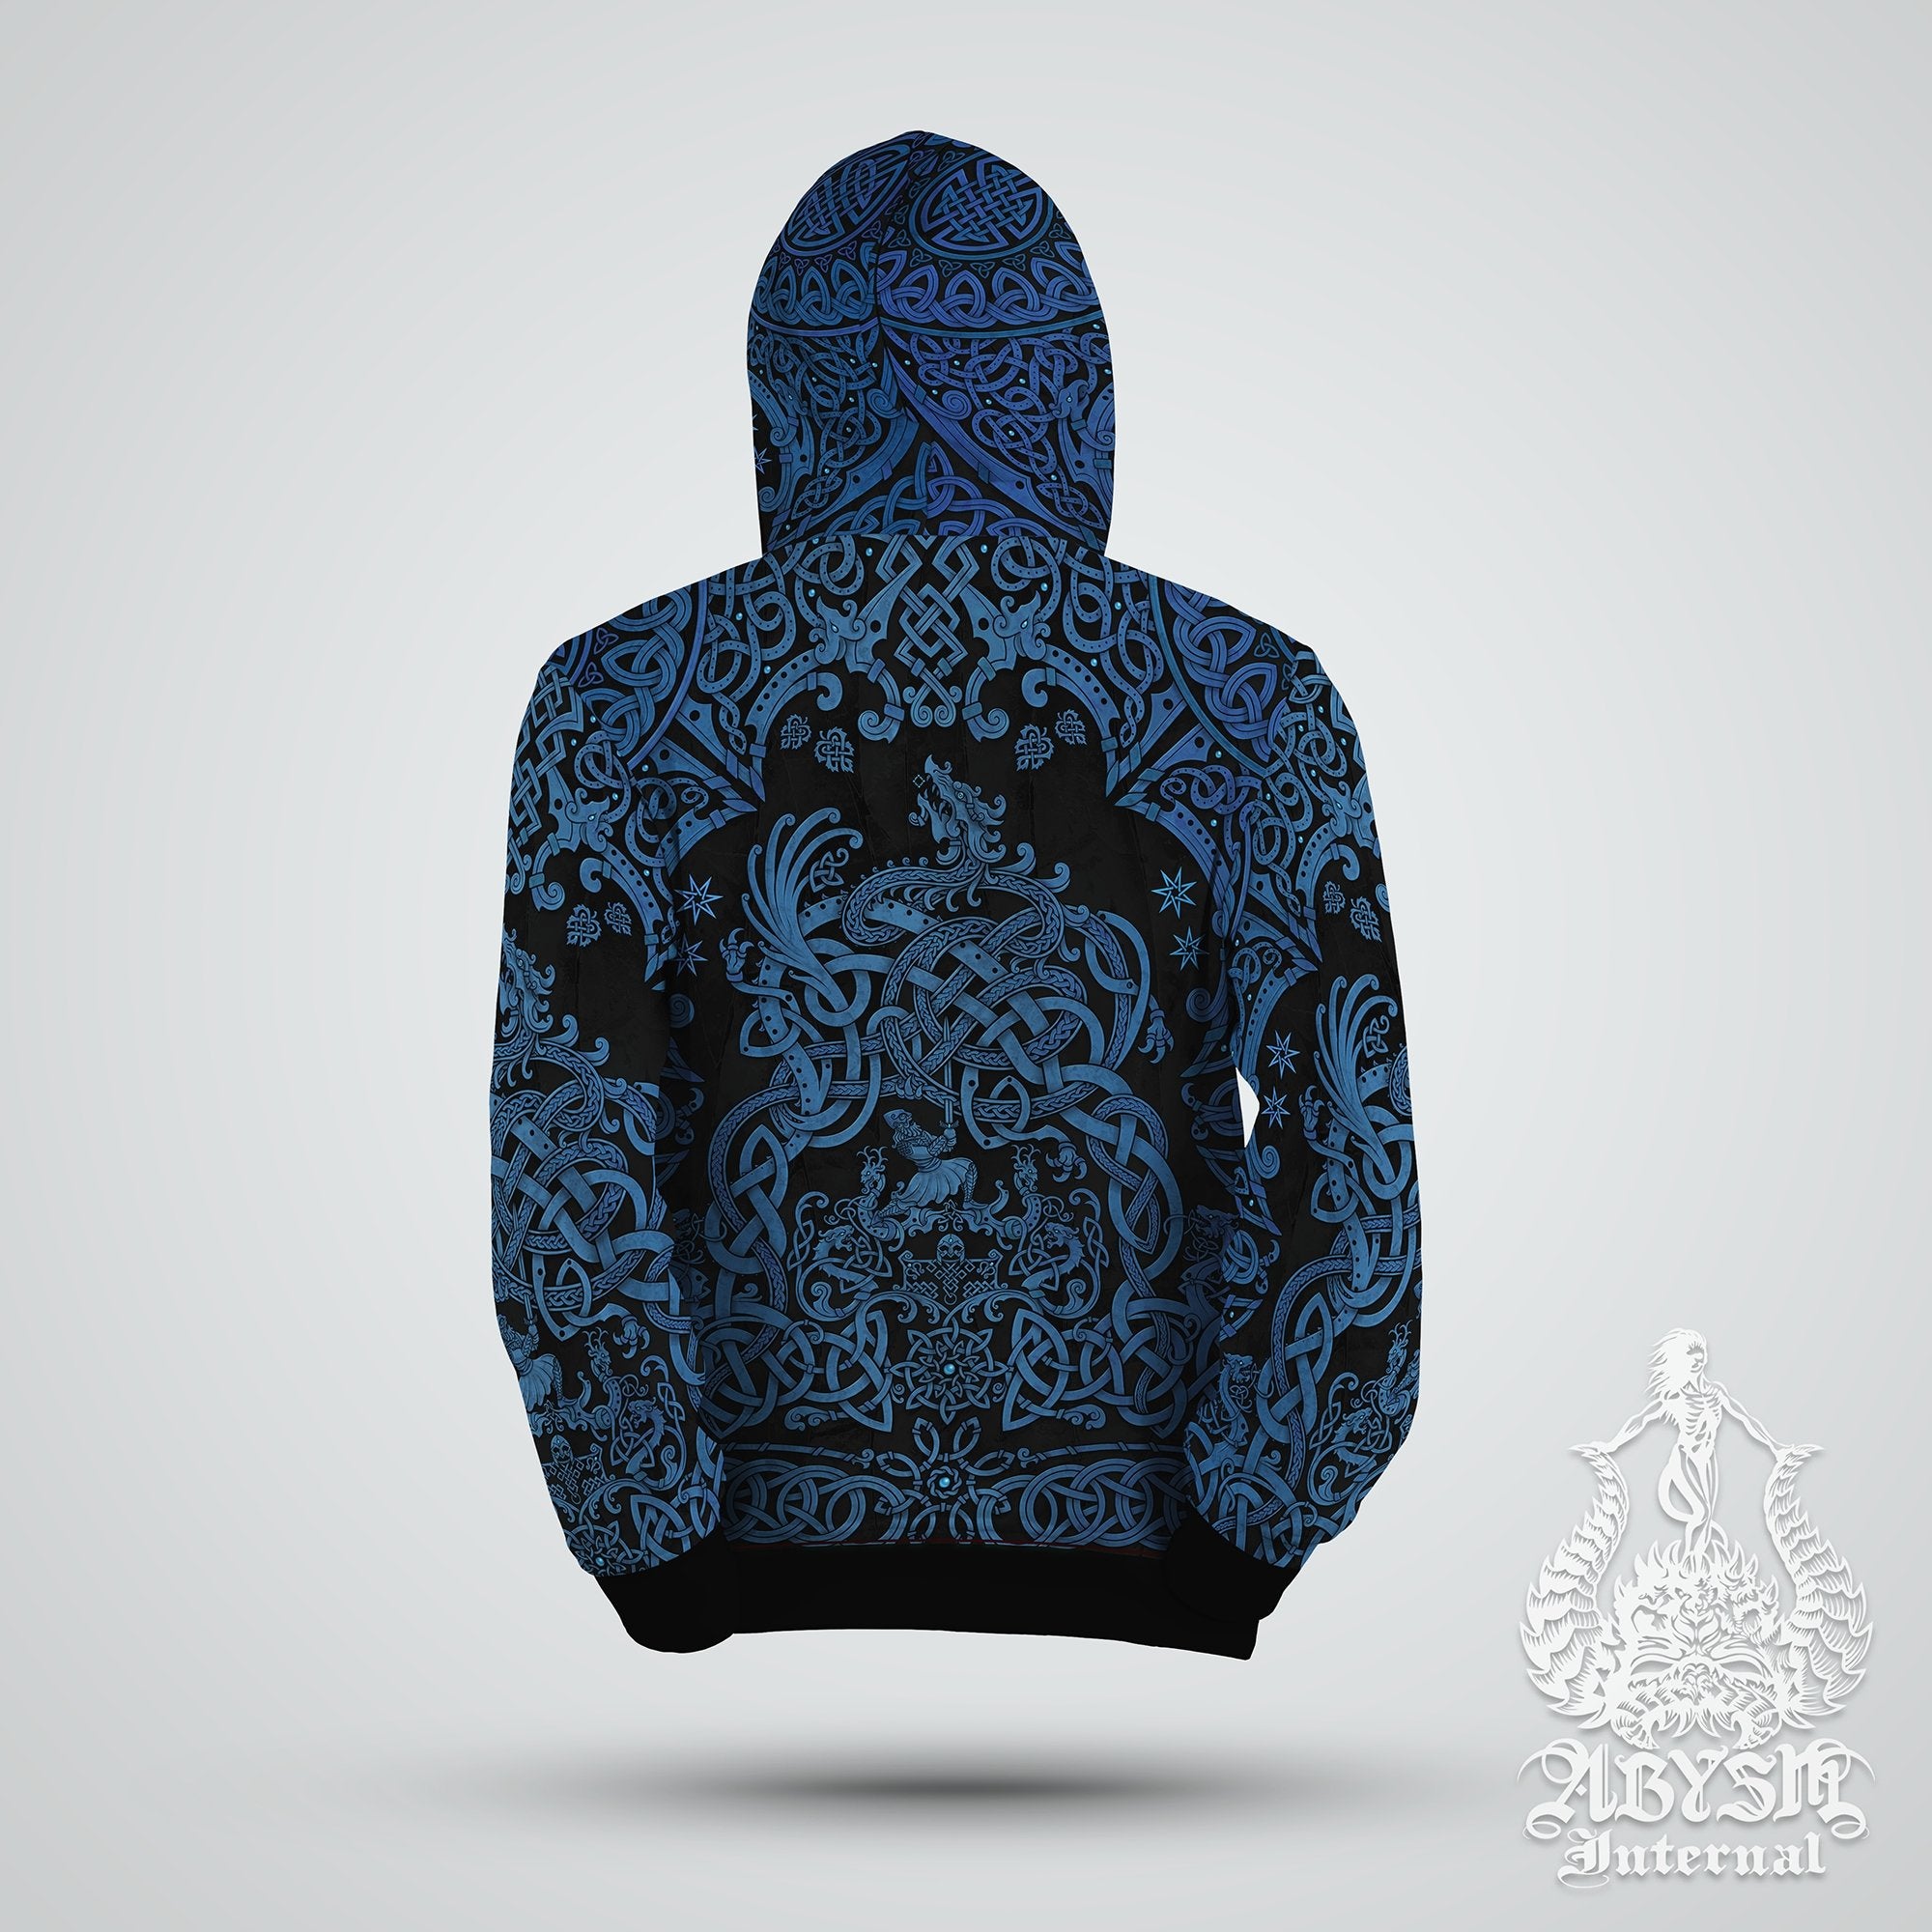 Viking Hoodie, Dragon Sweater, Concert Outfit, Norse Art Streetwear, Alternative Clothing, Unisex - Nordic Mythology, Fafnir, Black & Blue - Abysm Internal